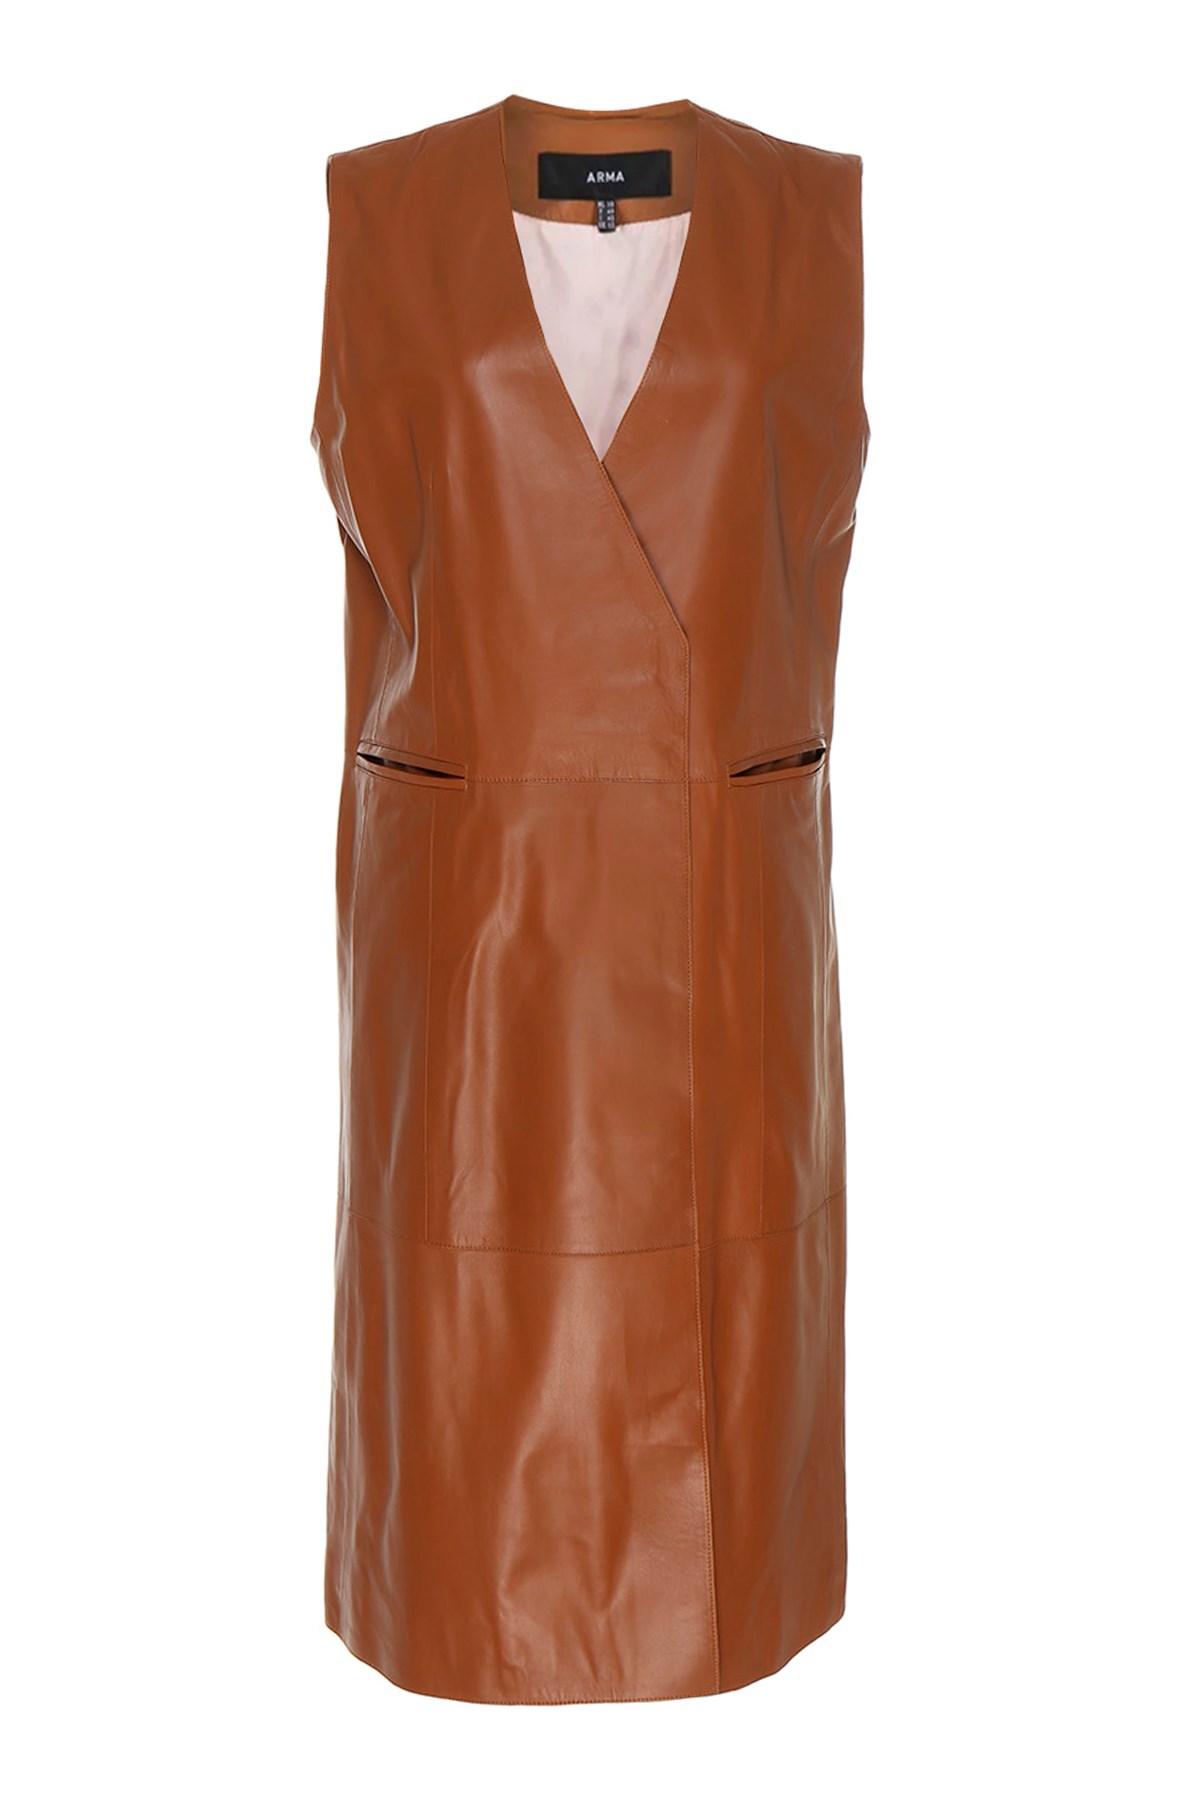 ARMA STUDIO 'Kynara' Leather Dress